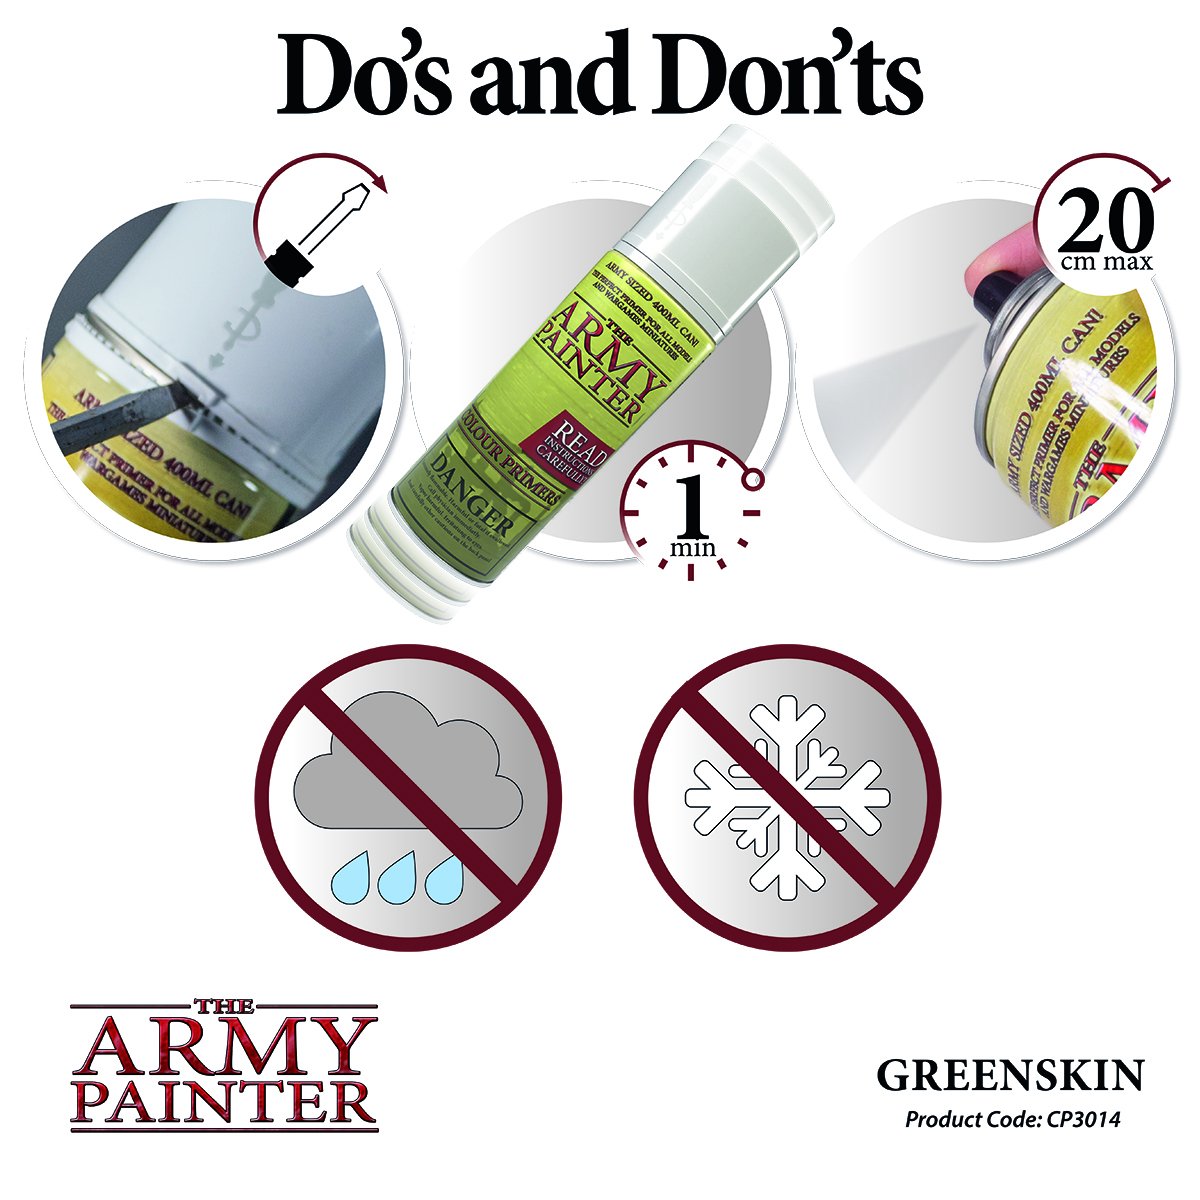 Army Painter: Alien Purple Spray Paint Primer